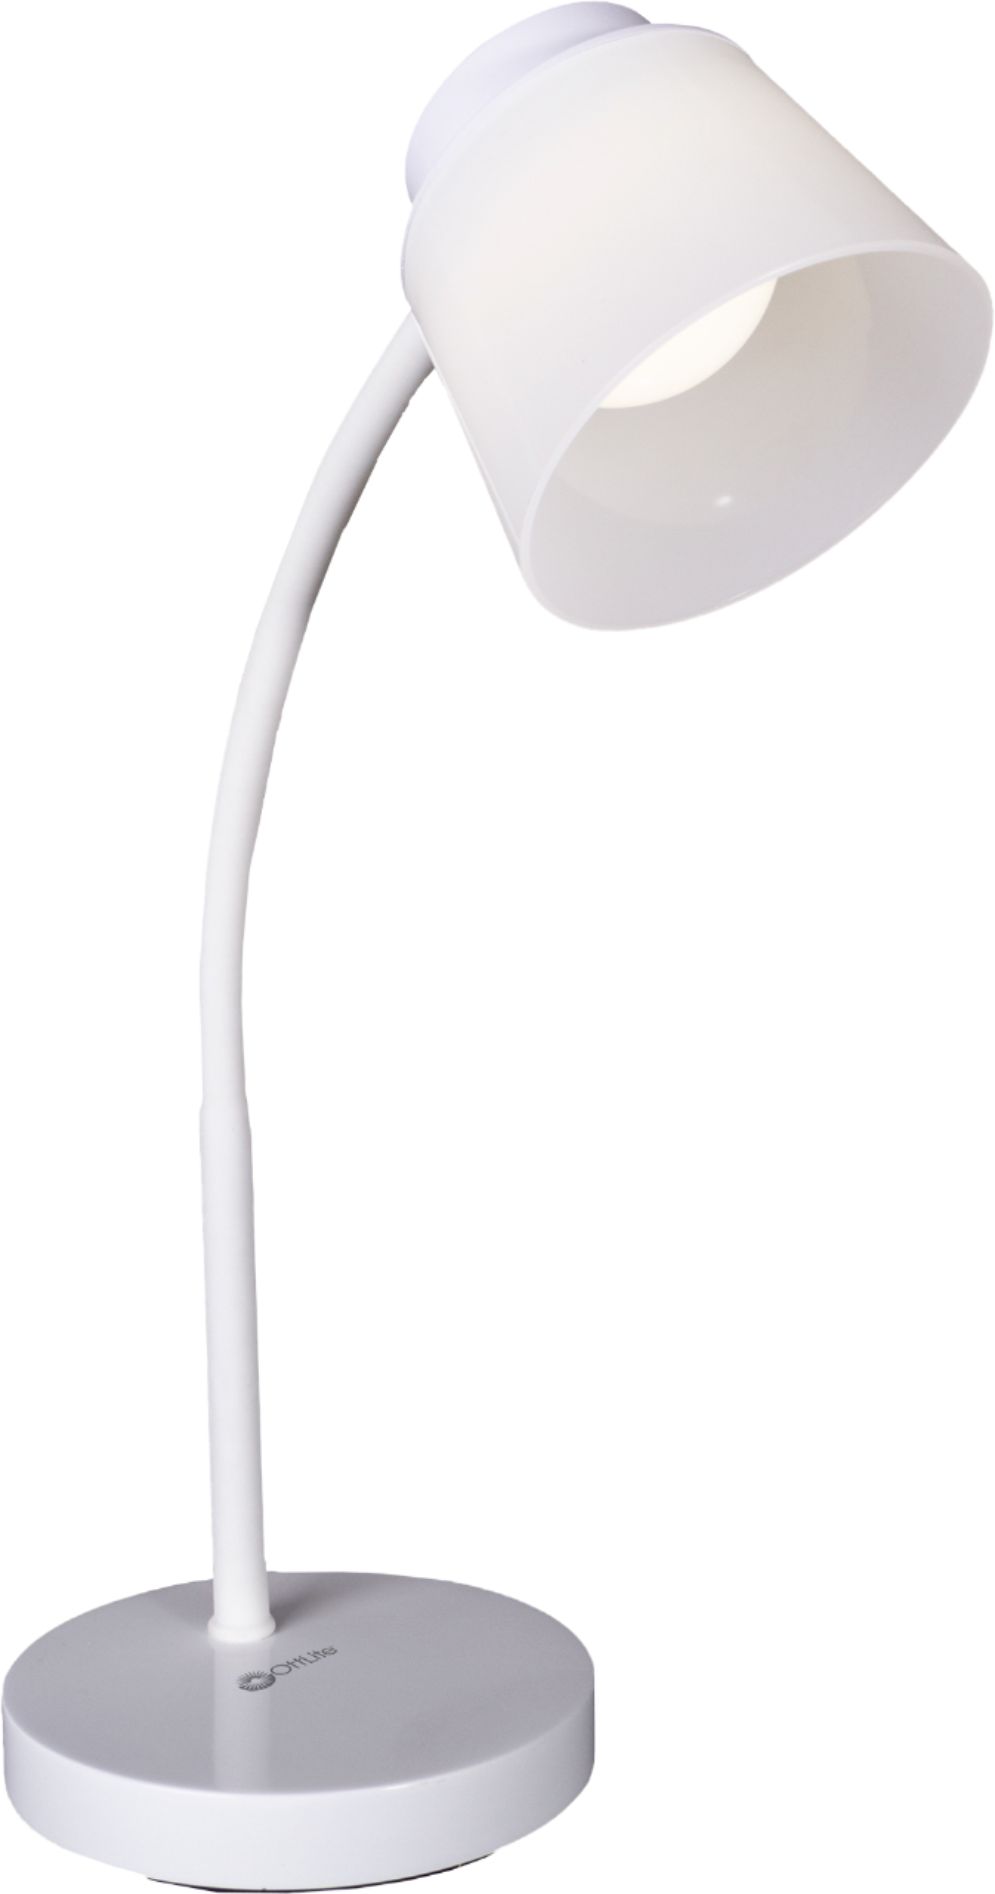 OttLite Clarify LED Desk Lamp with 4 Brightness Settings and